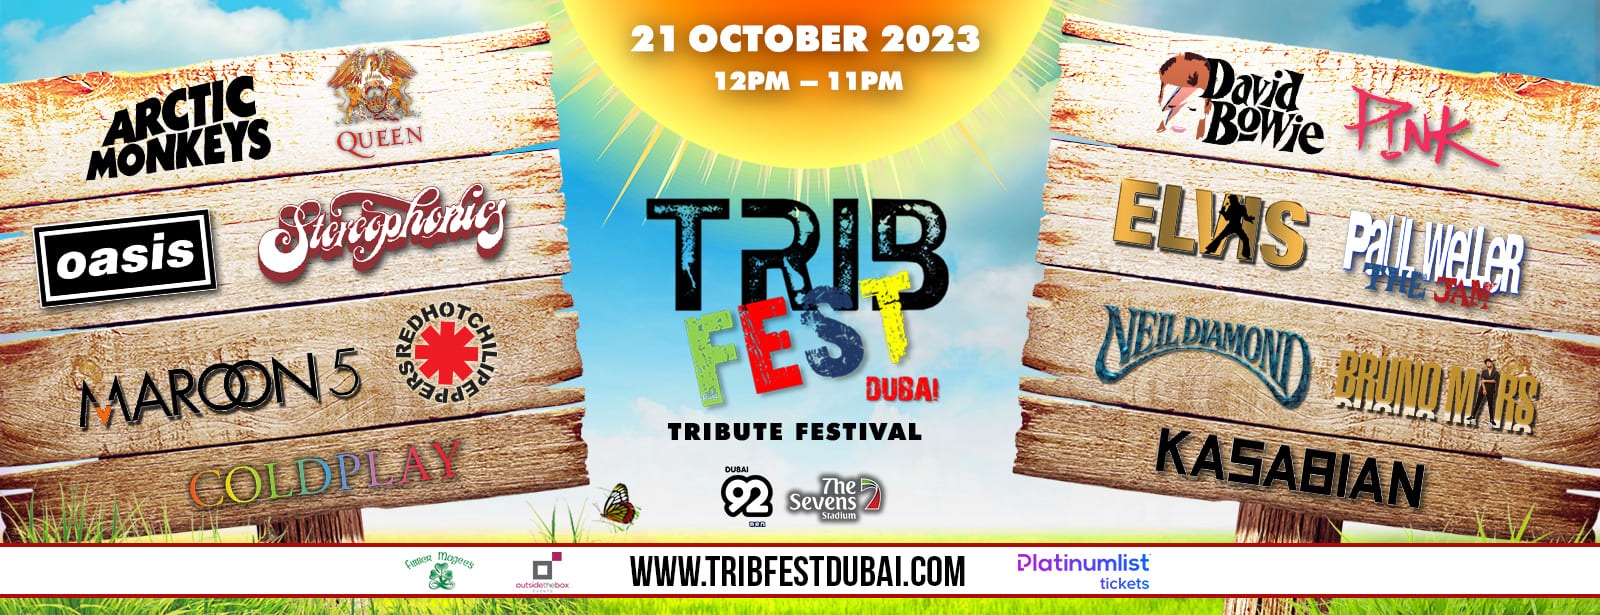 Trib Fest in Dubai - Coming Soon in UAE